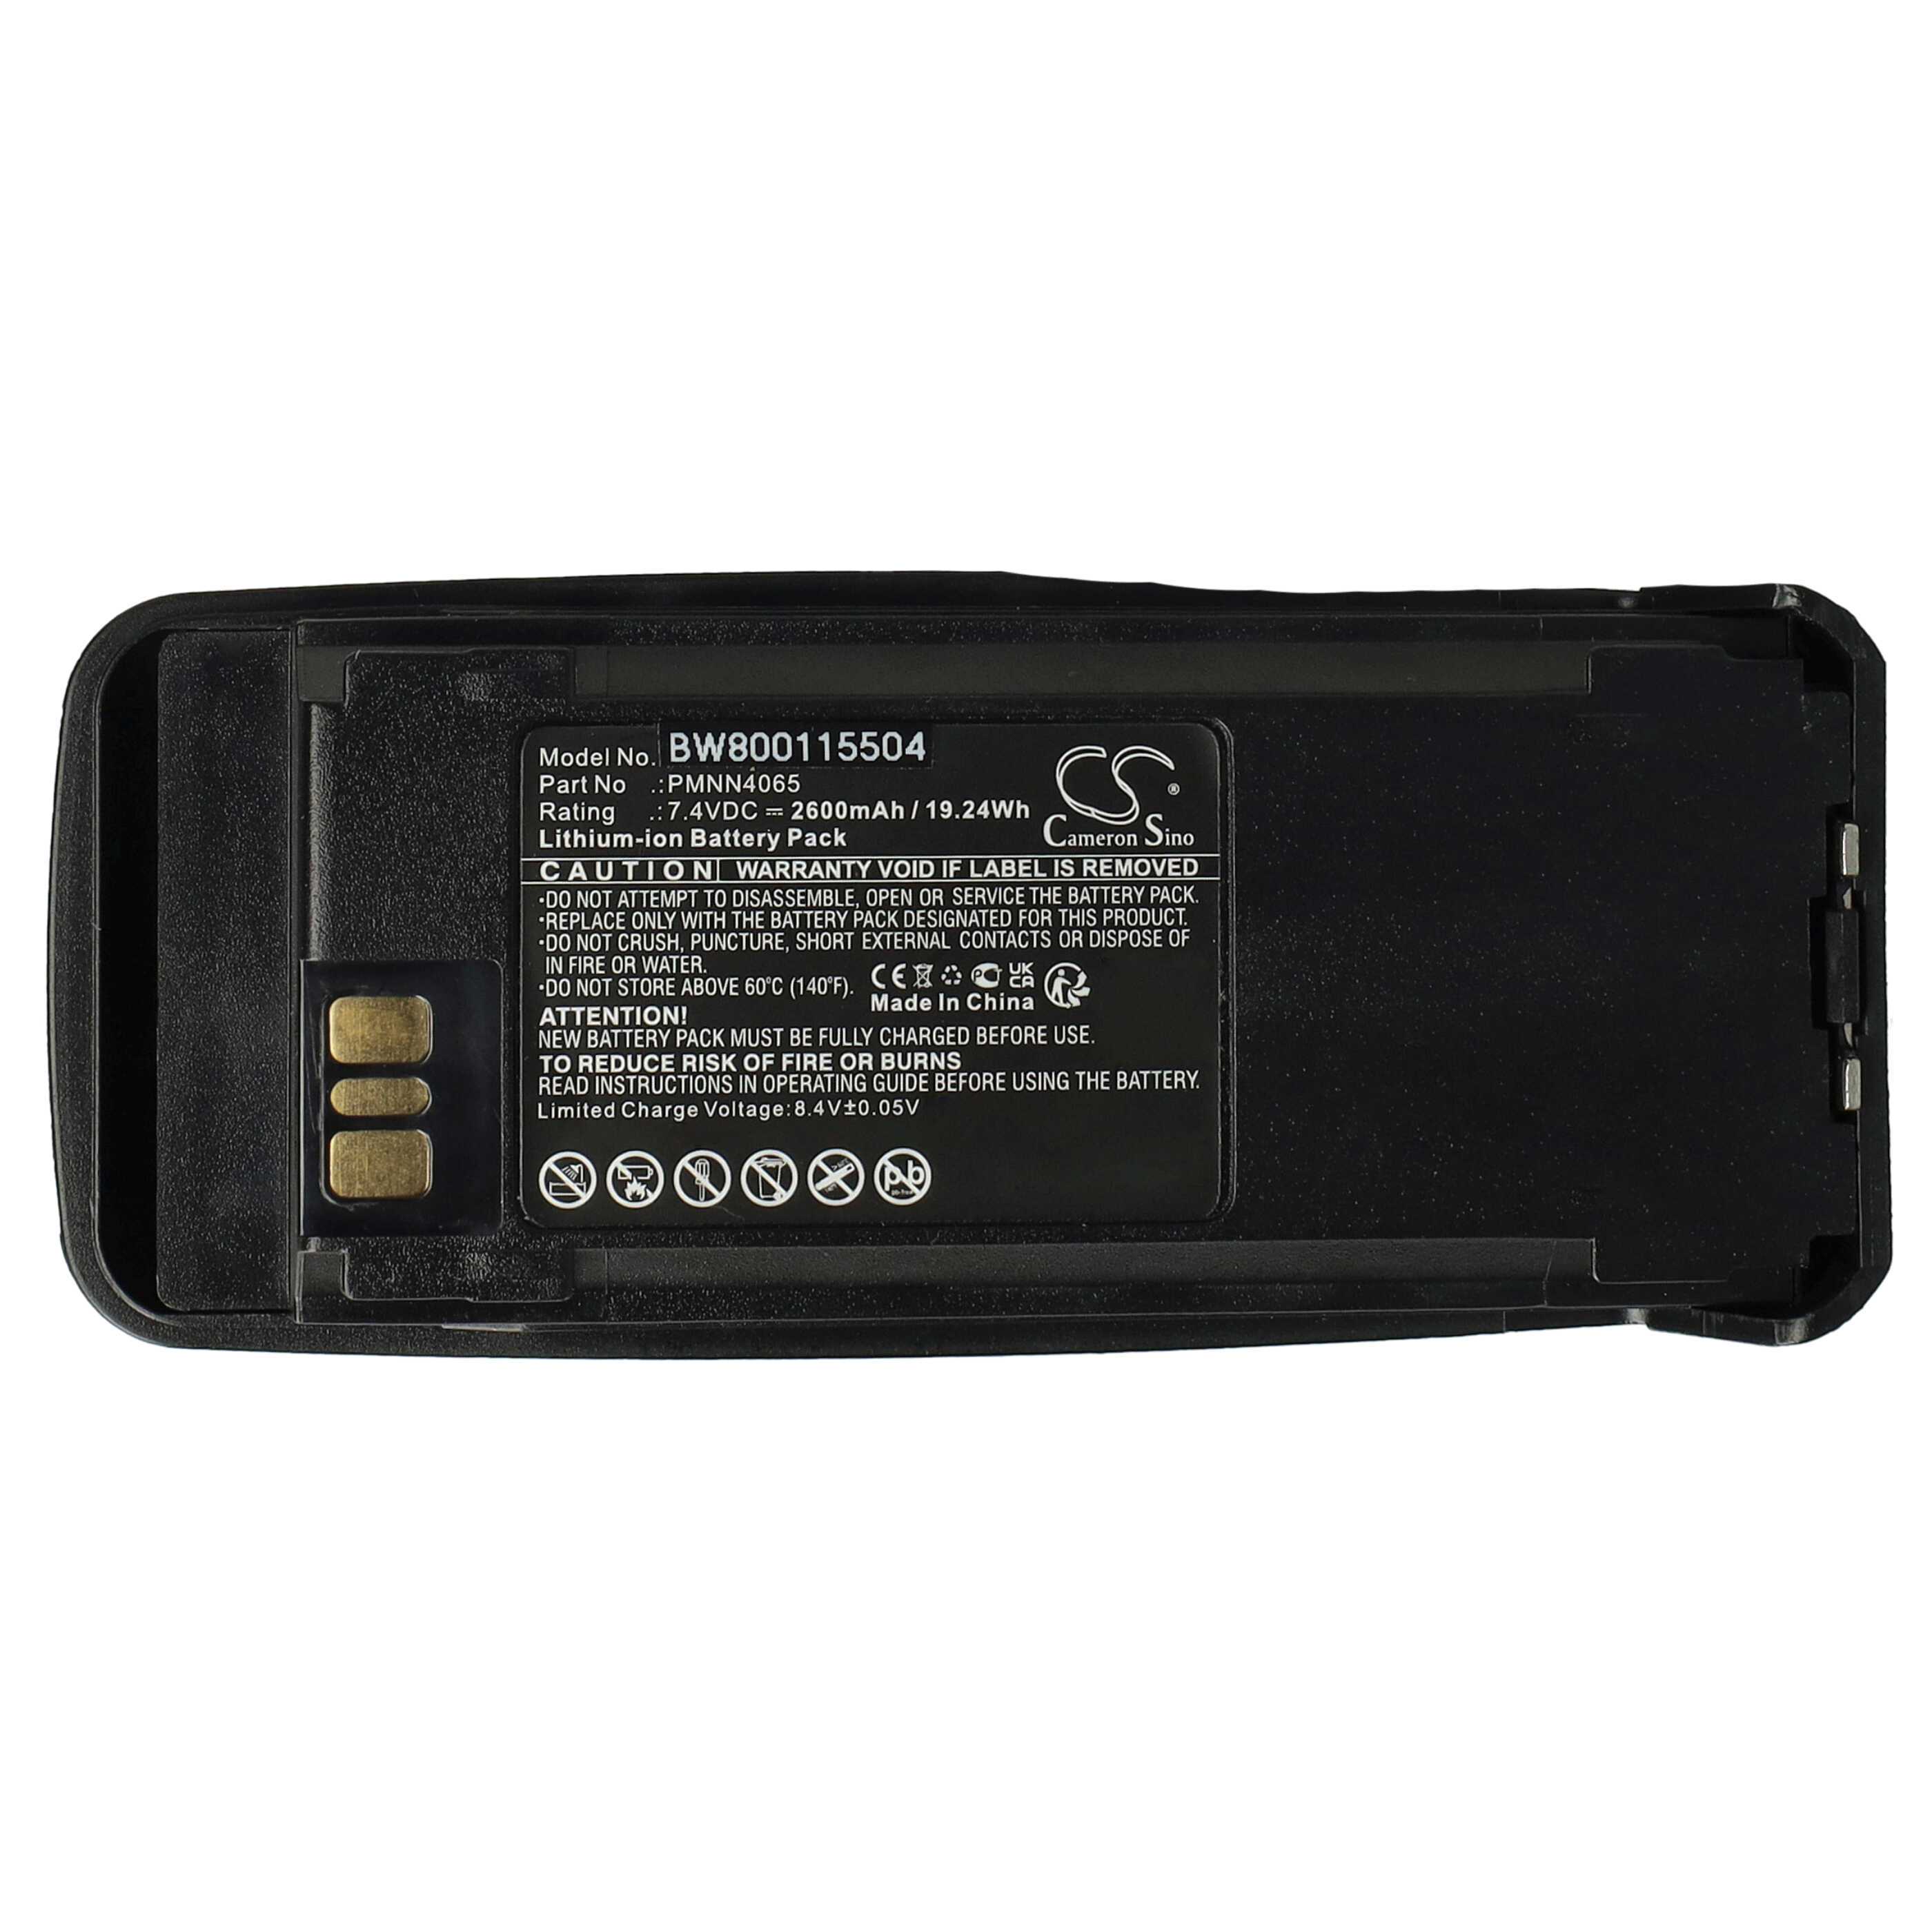 Akumulator do radiotelefonu zamiennik Motorola NNTN4066, NNTN4077 - 2600 mAh 7,4 V Li-Ion + klips na pasek